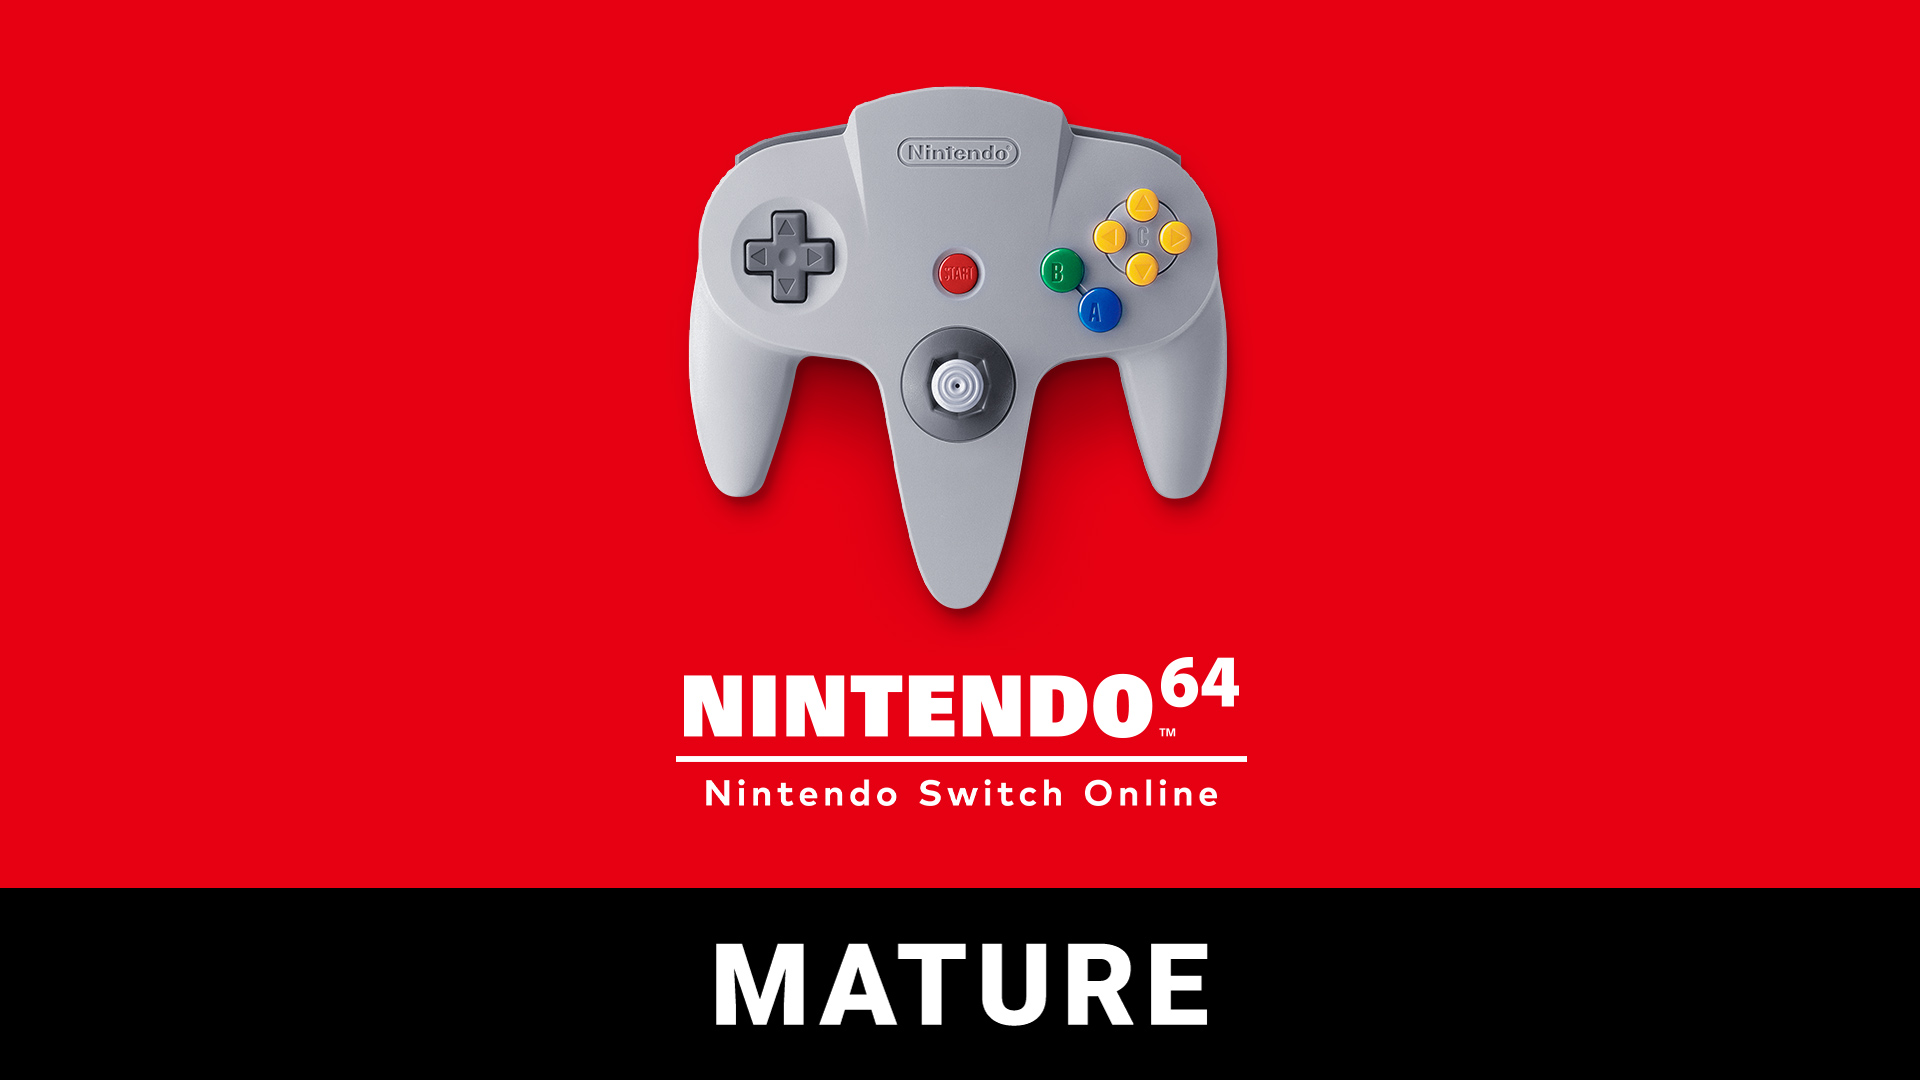 Nintendo 64 – Nintendo Switch Online: Mature